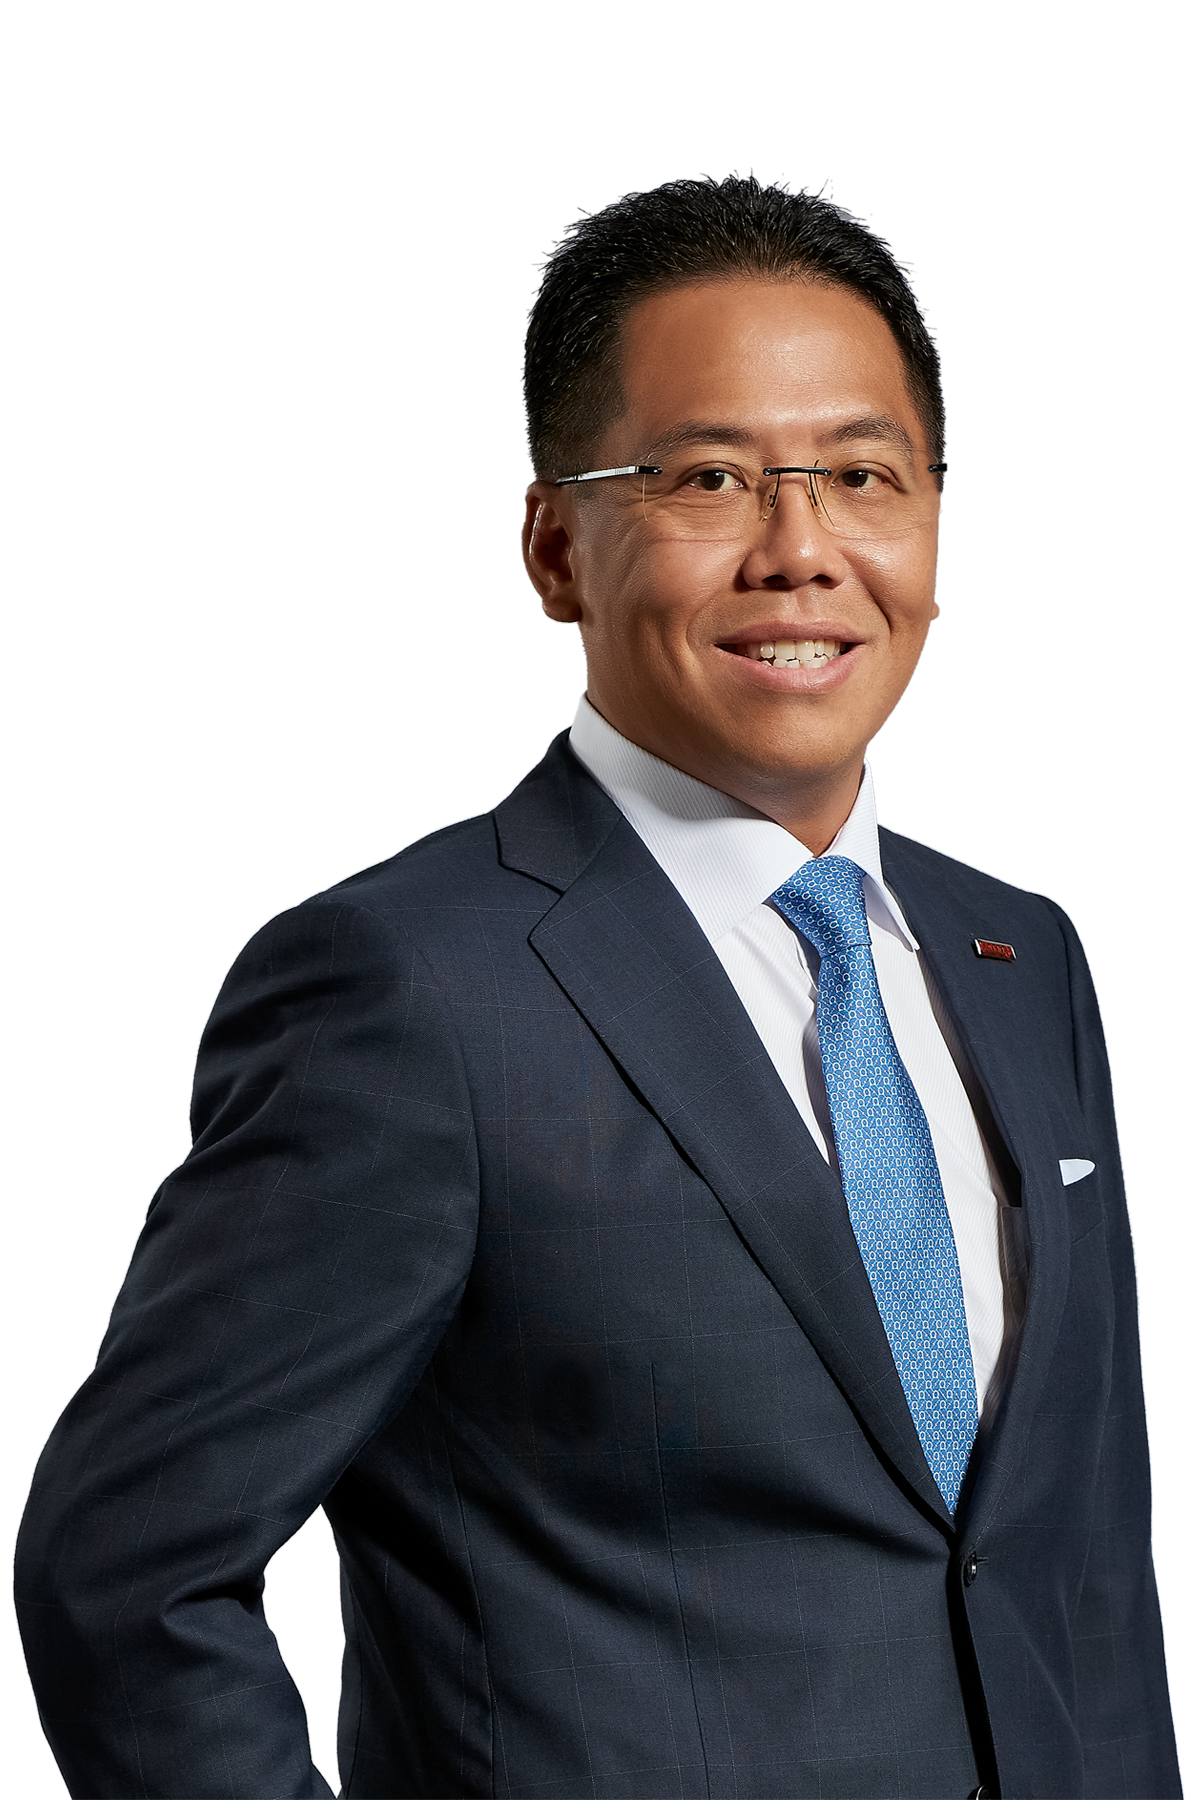 Datuk Wira Ismitz Matthew De Alwis, Executive Director and Chief Executive Officer of Kenanga Investors Berhad.